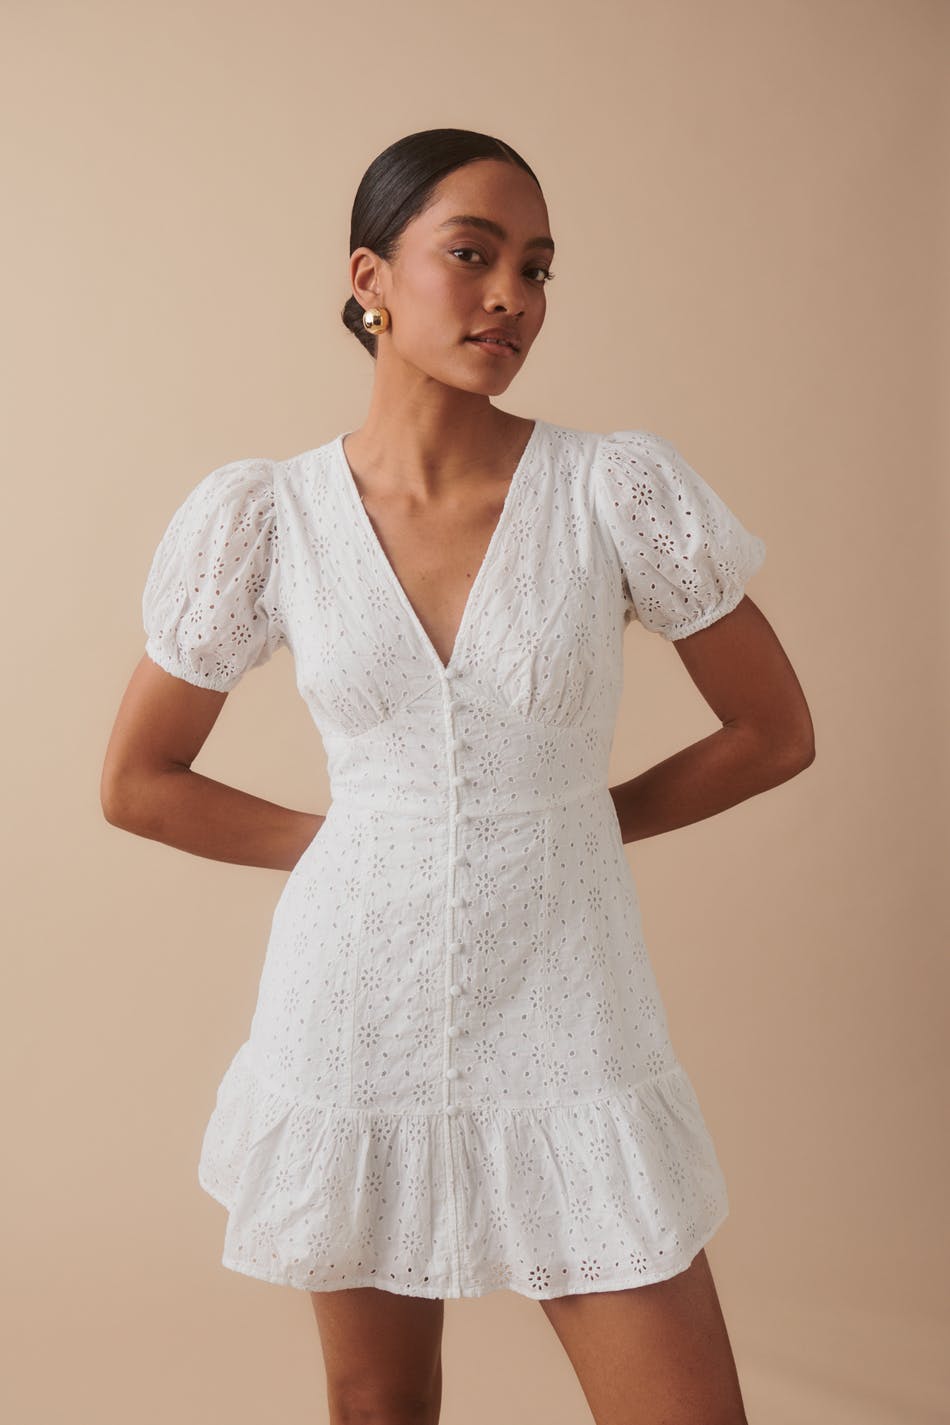 Gina Tricot - Embroderie anglaise dress. - miniklänningar - White - XXL - Female